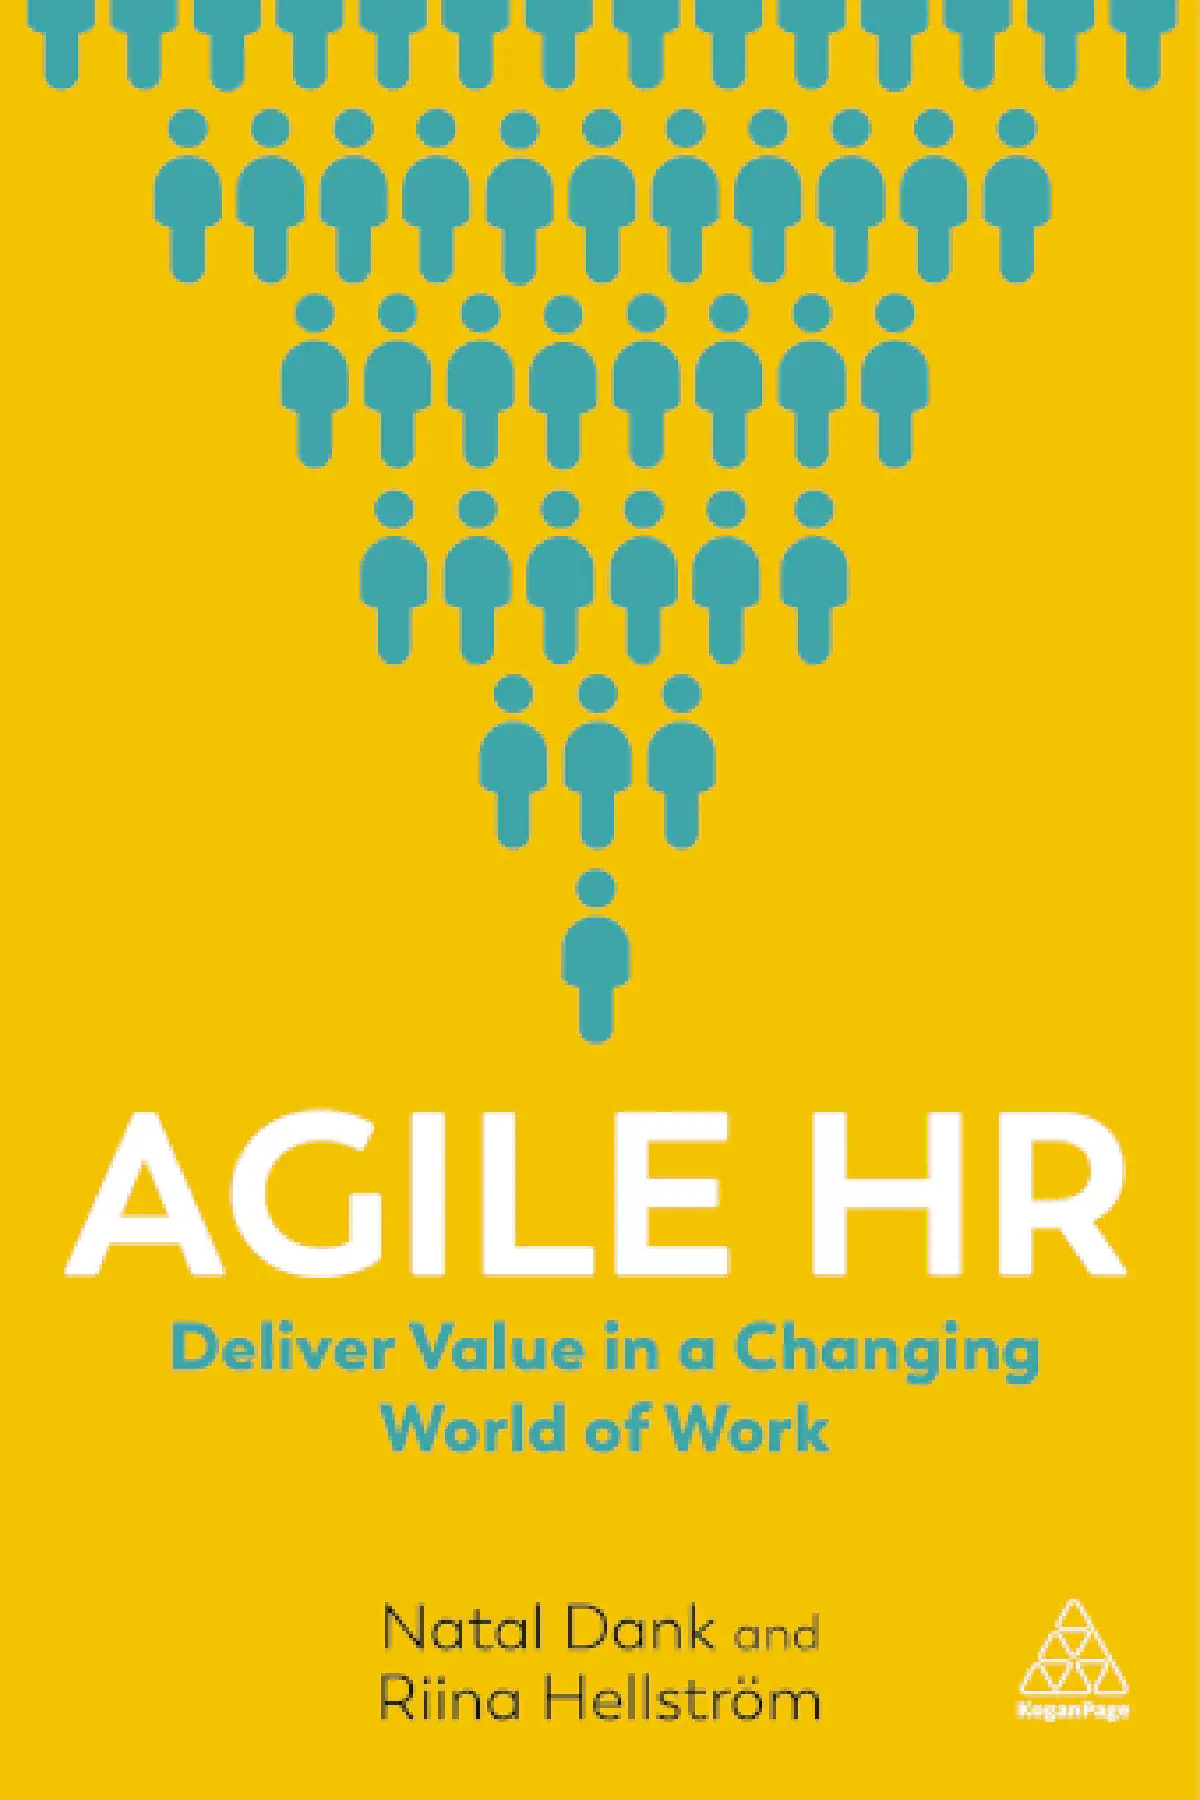 Couverture du livre Agile HR, Deliver value in a changing world of work